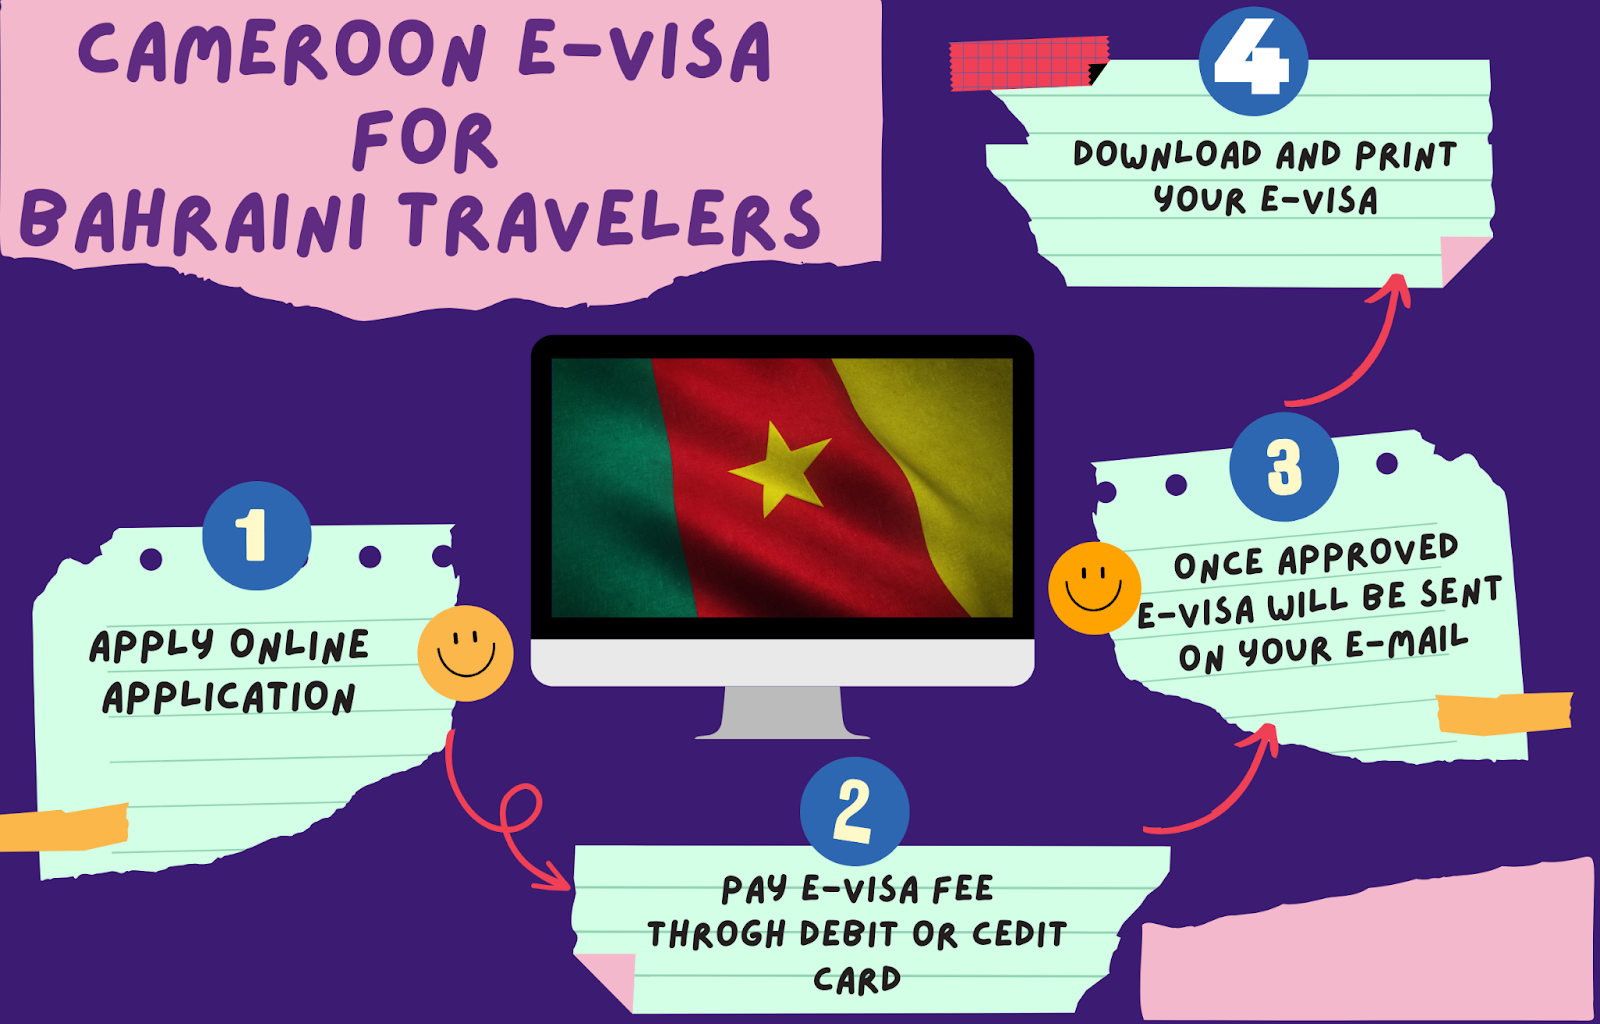 Cameroon e-Visa from Bahrain